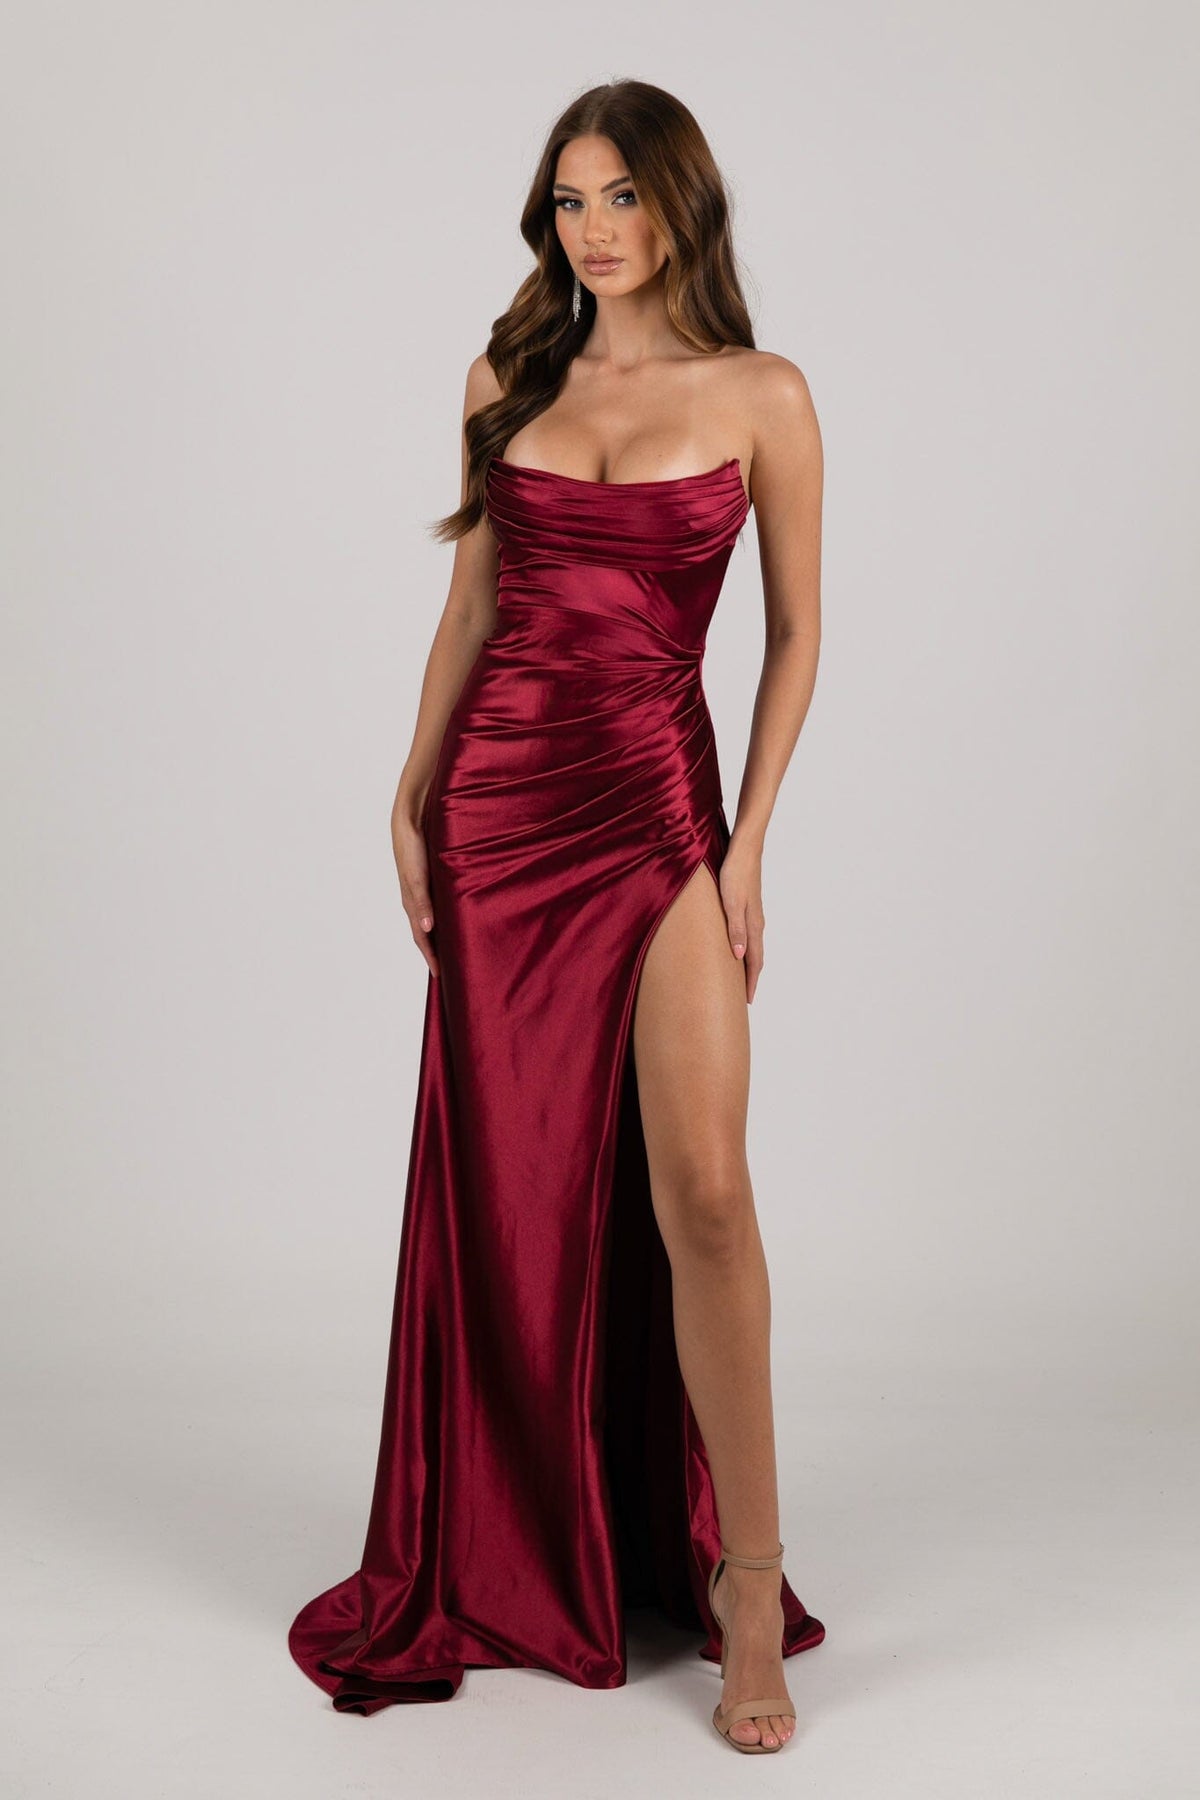 Burgundy Dark Red Stretch Satin Formal Gown with Bustier Strapless Neckline and Thigh High Side Slit